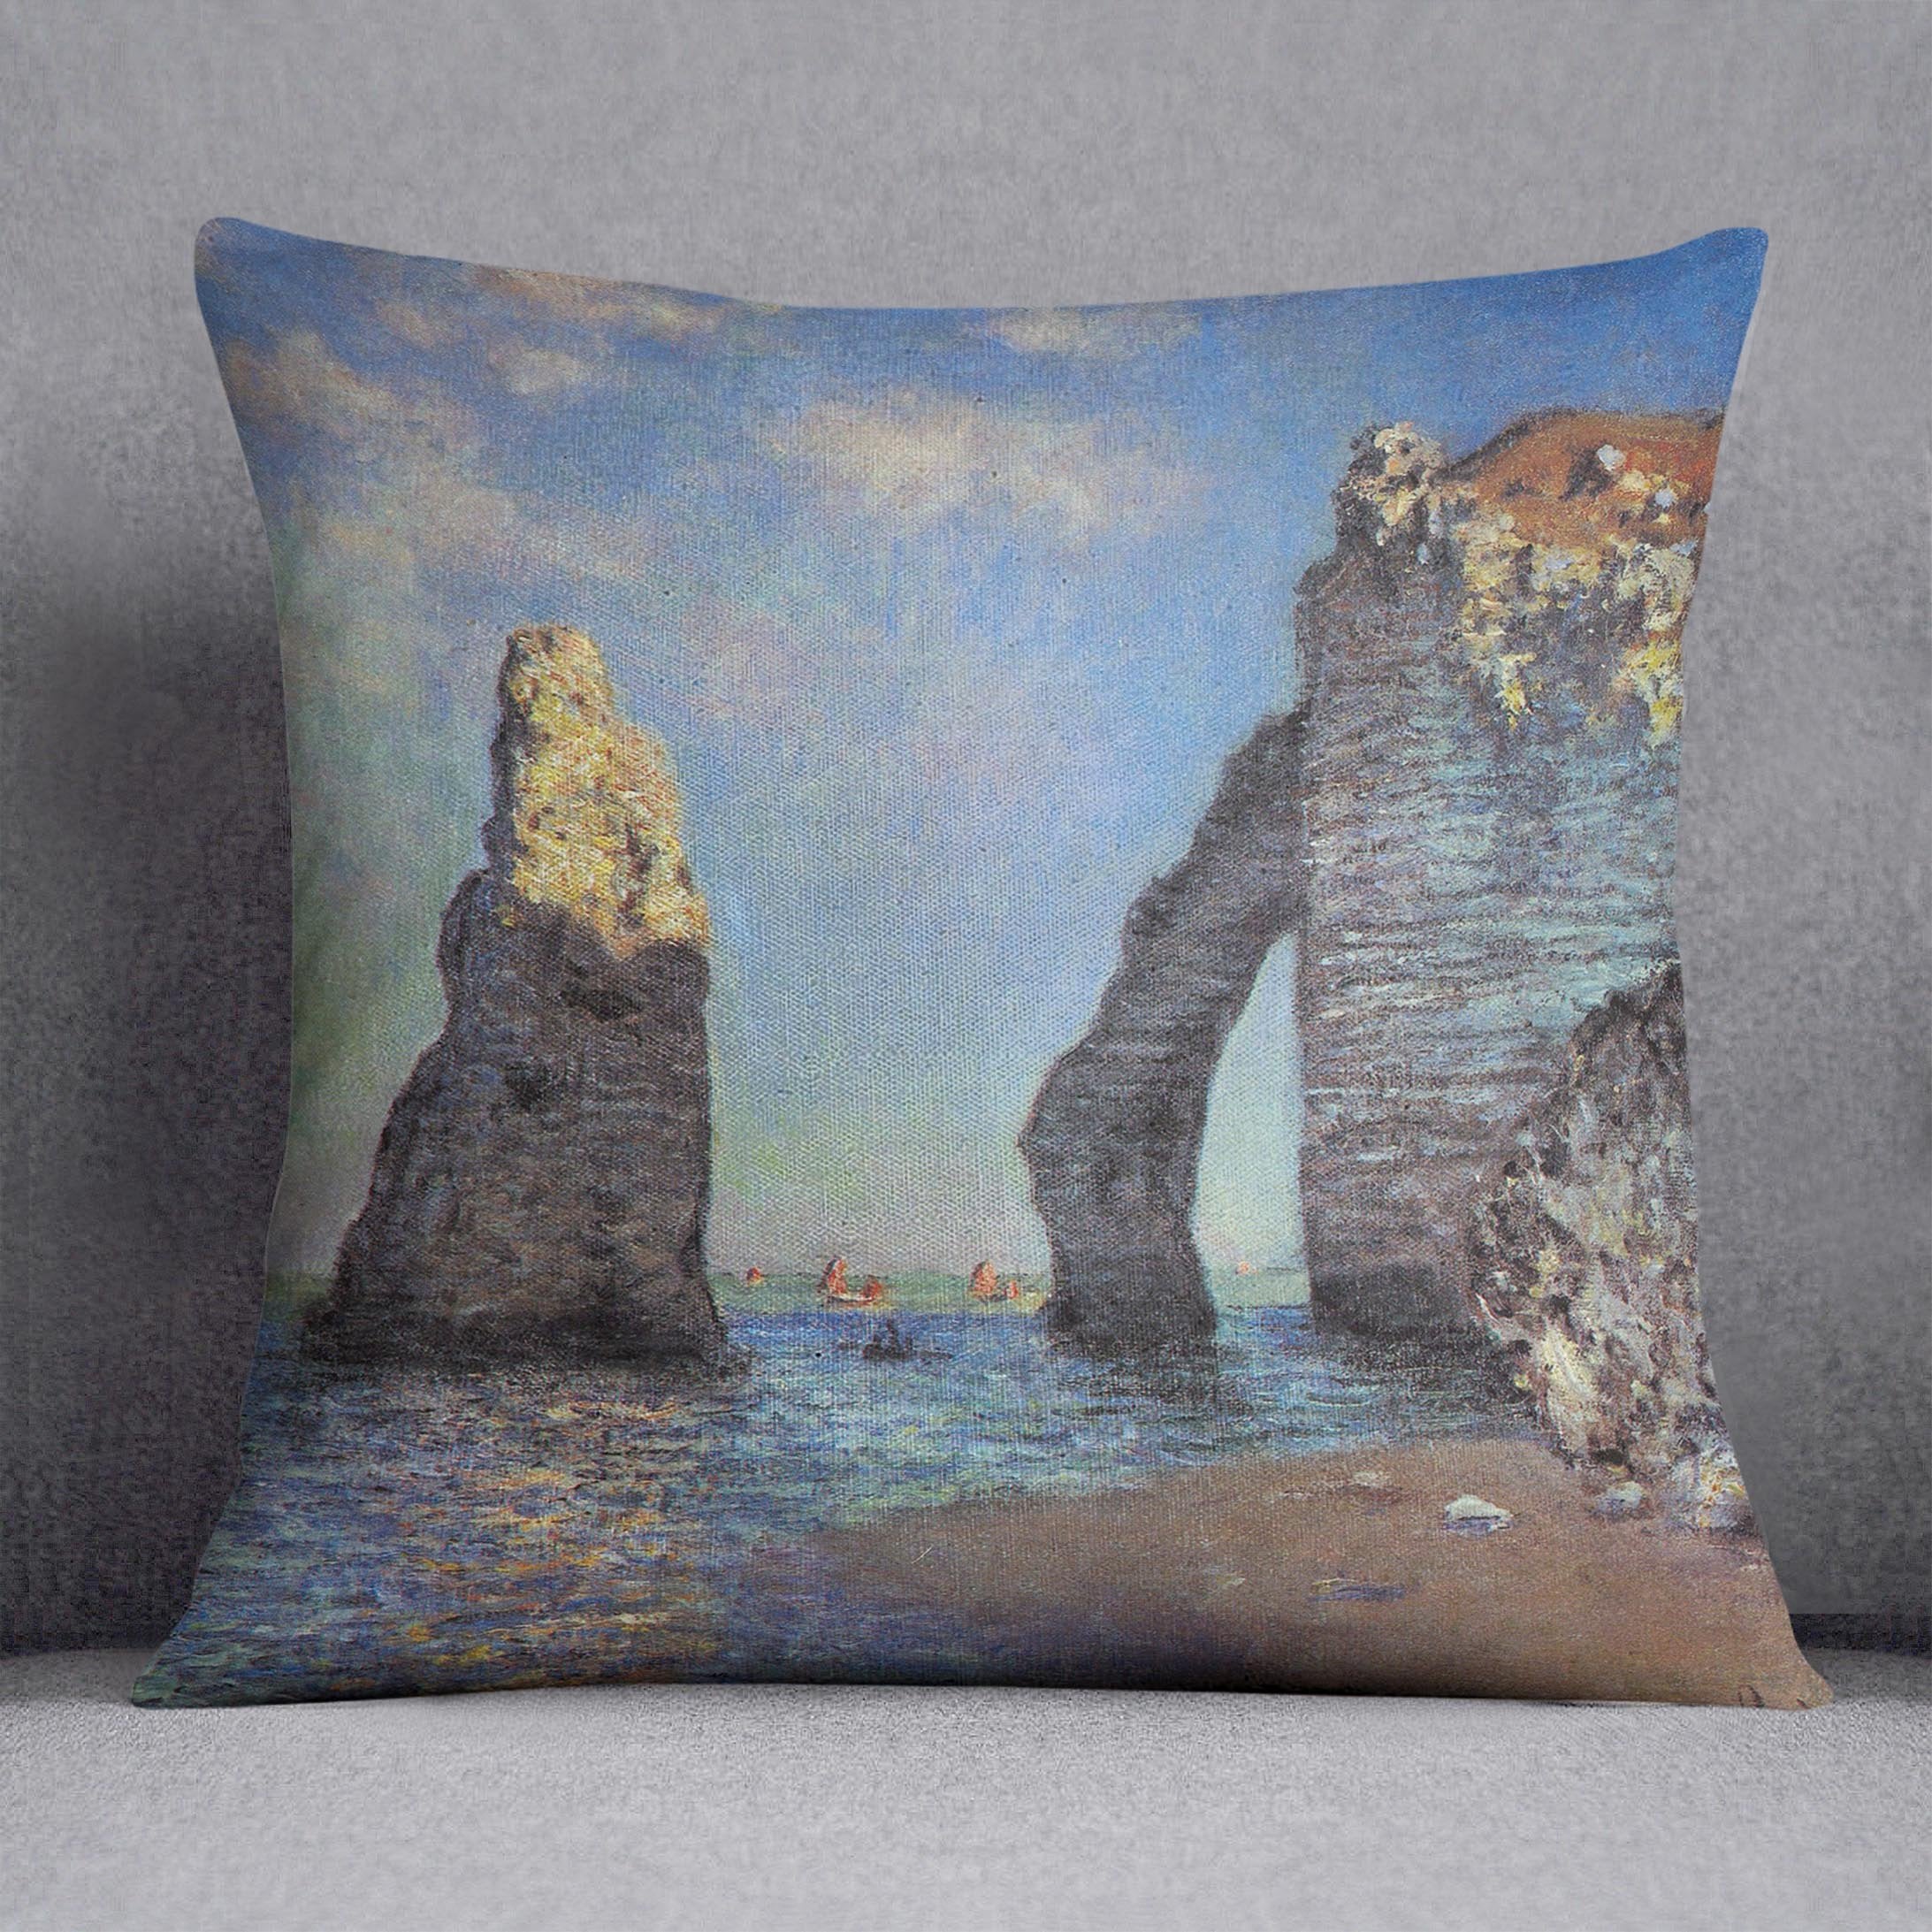 The rocky cliffs of etretat by Monet Throw Pillow